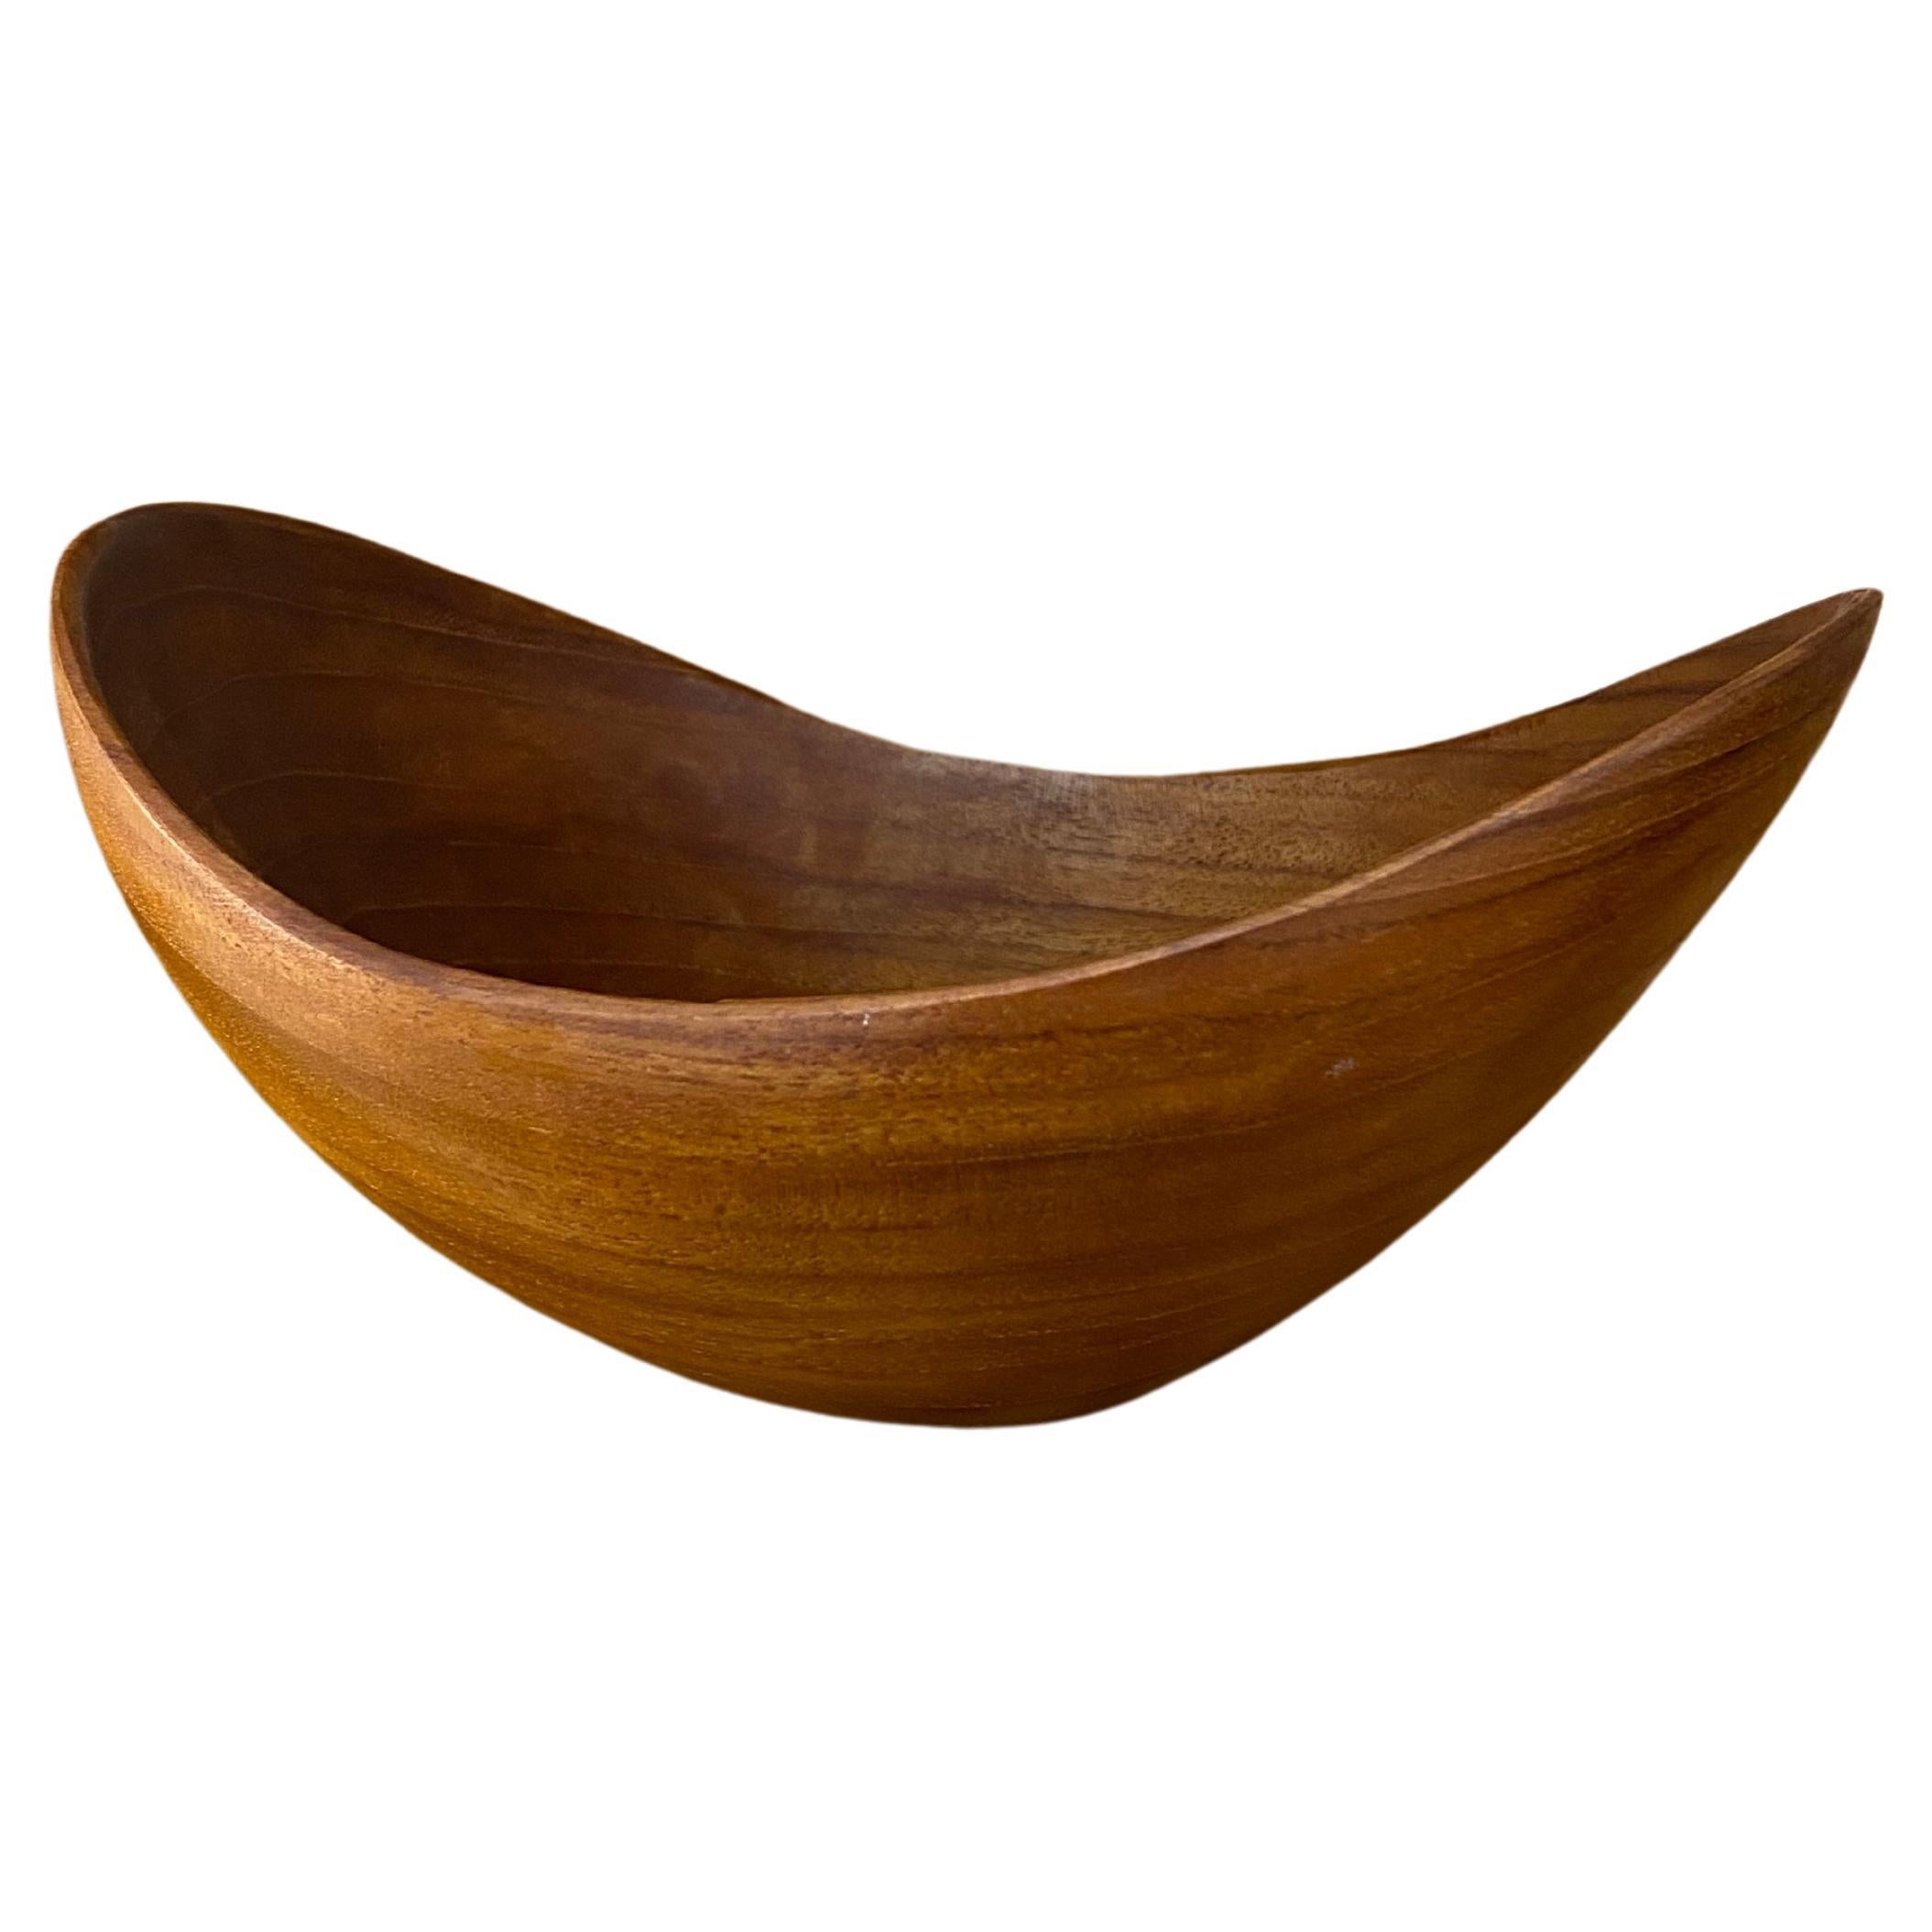 Carved Teak Bowl by Stig Sandqvist